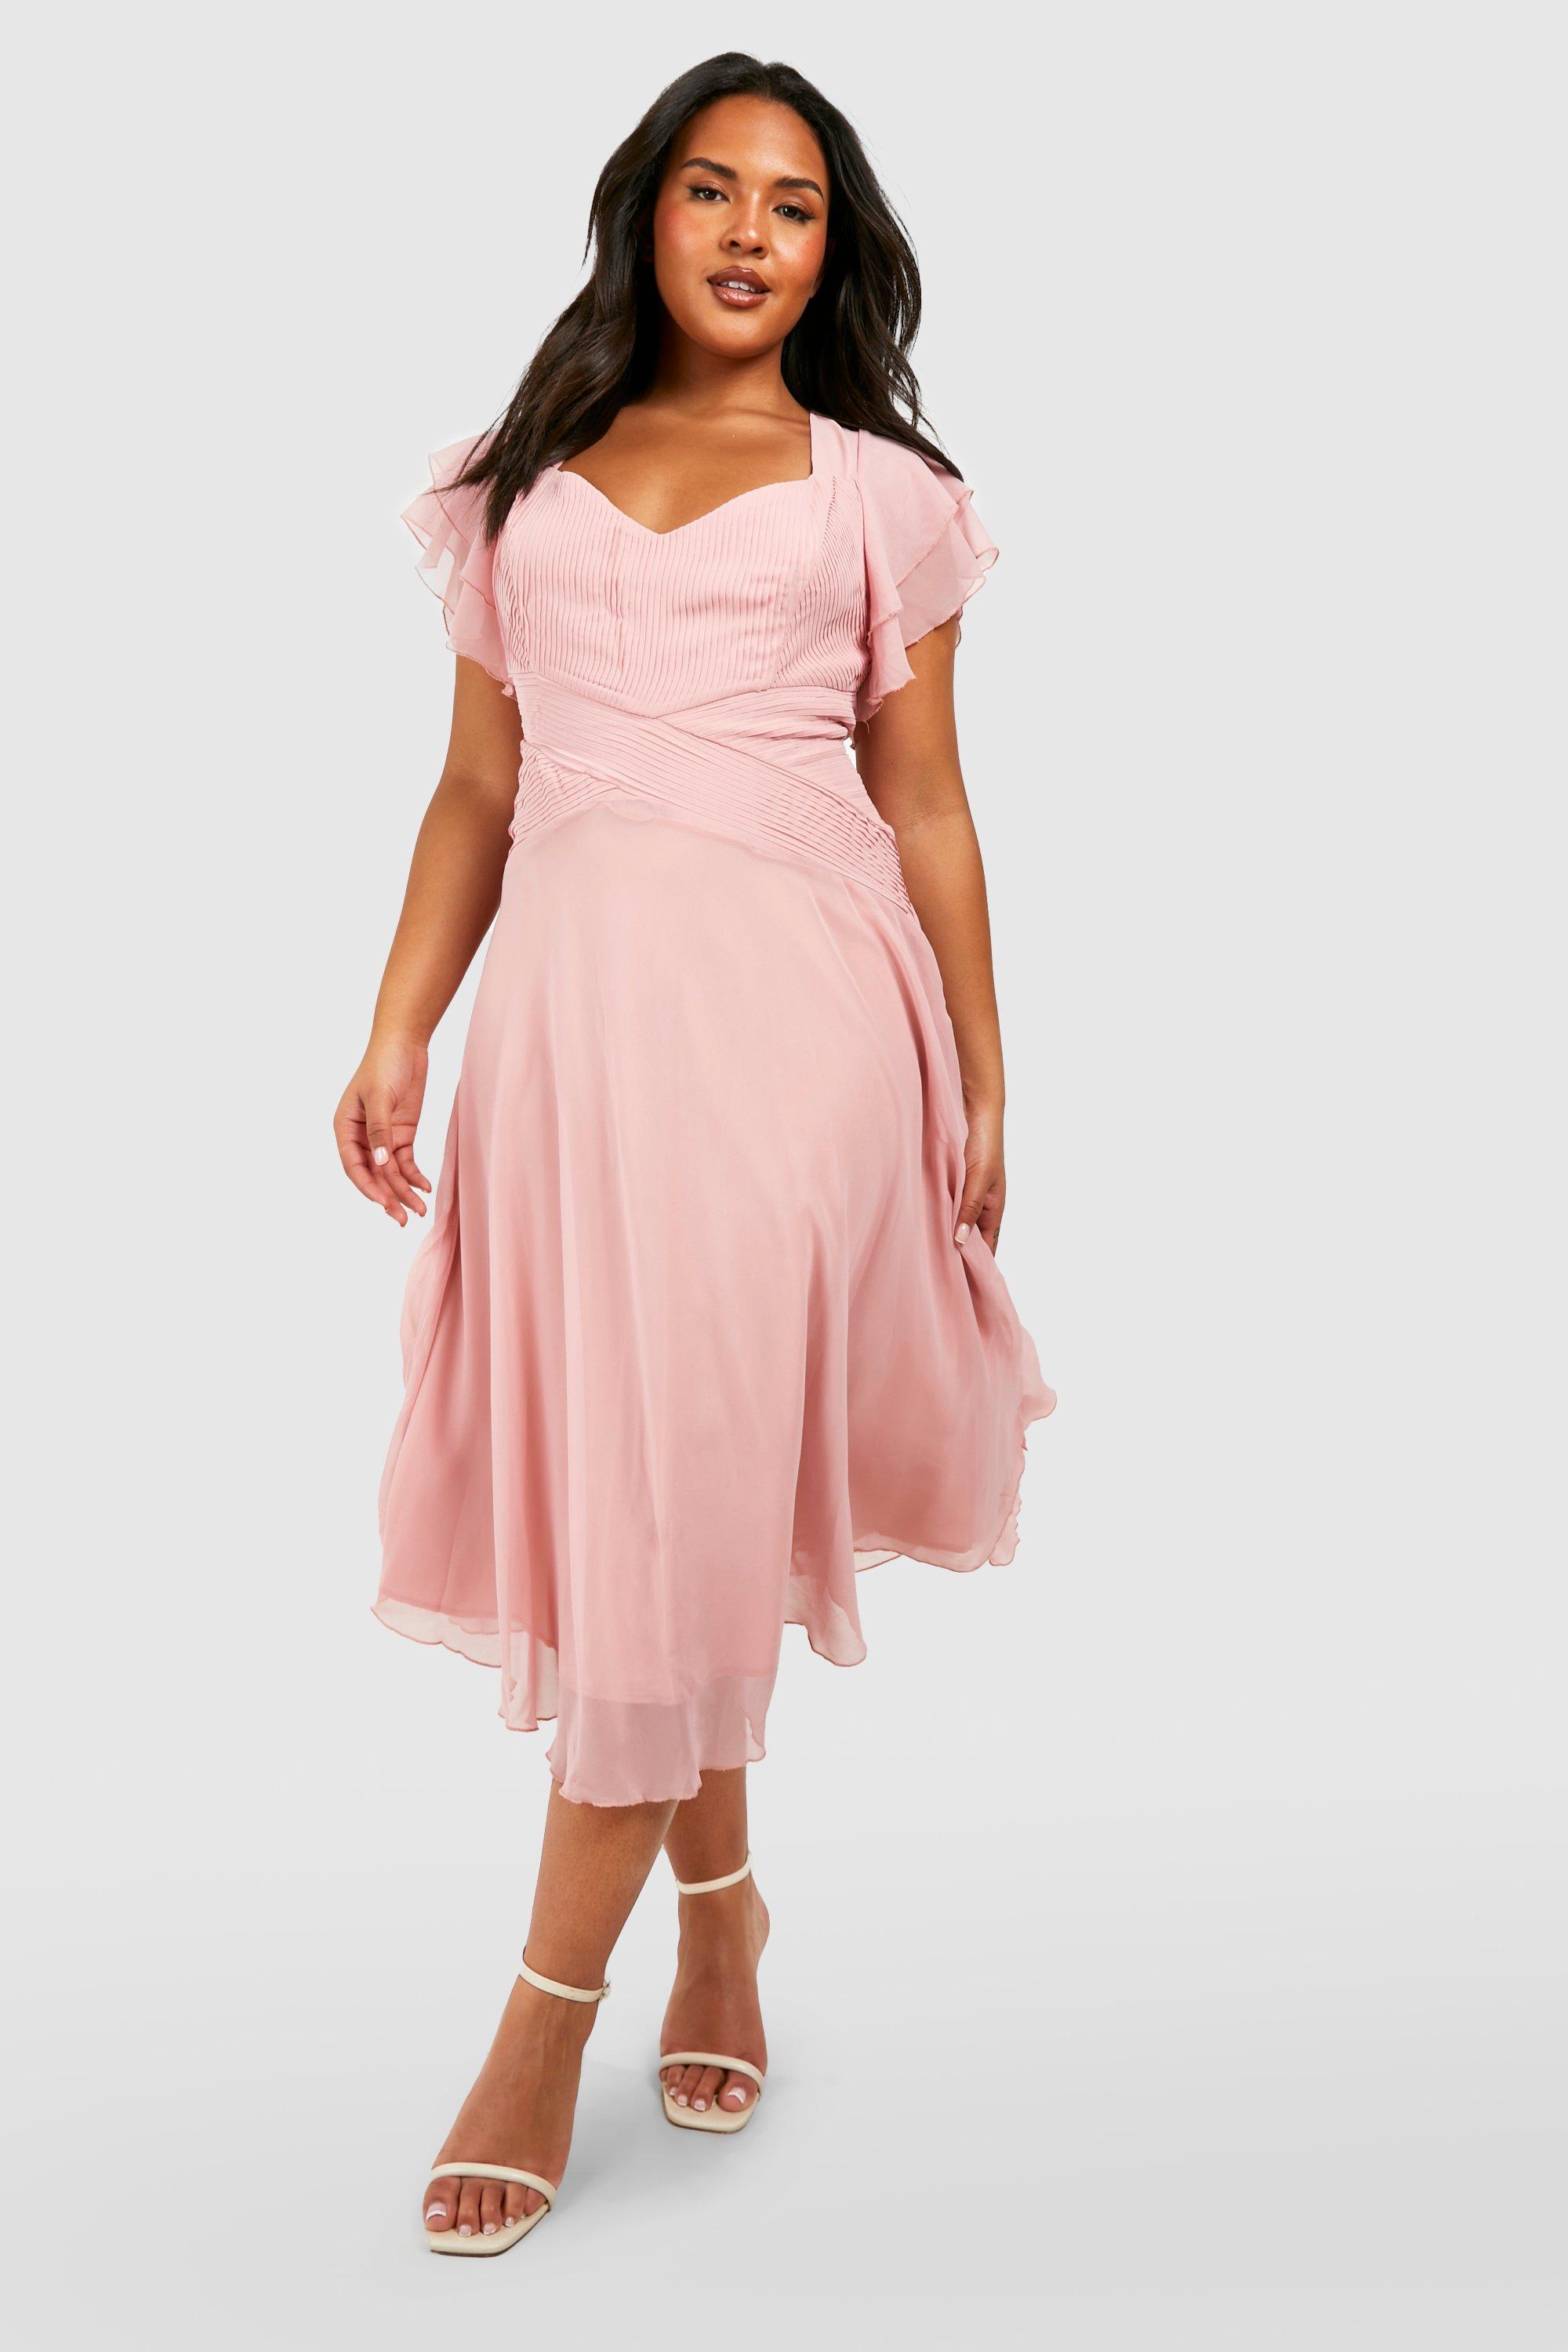 https://media.boohoo.com/i/boohoo/pzz01460_blush_xl_2/female-blush-plus-occasion-angel-sleeve-chiffon-midi-dress